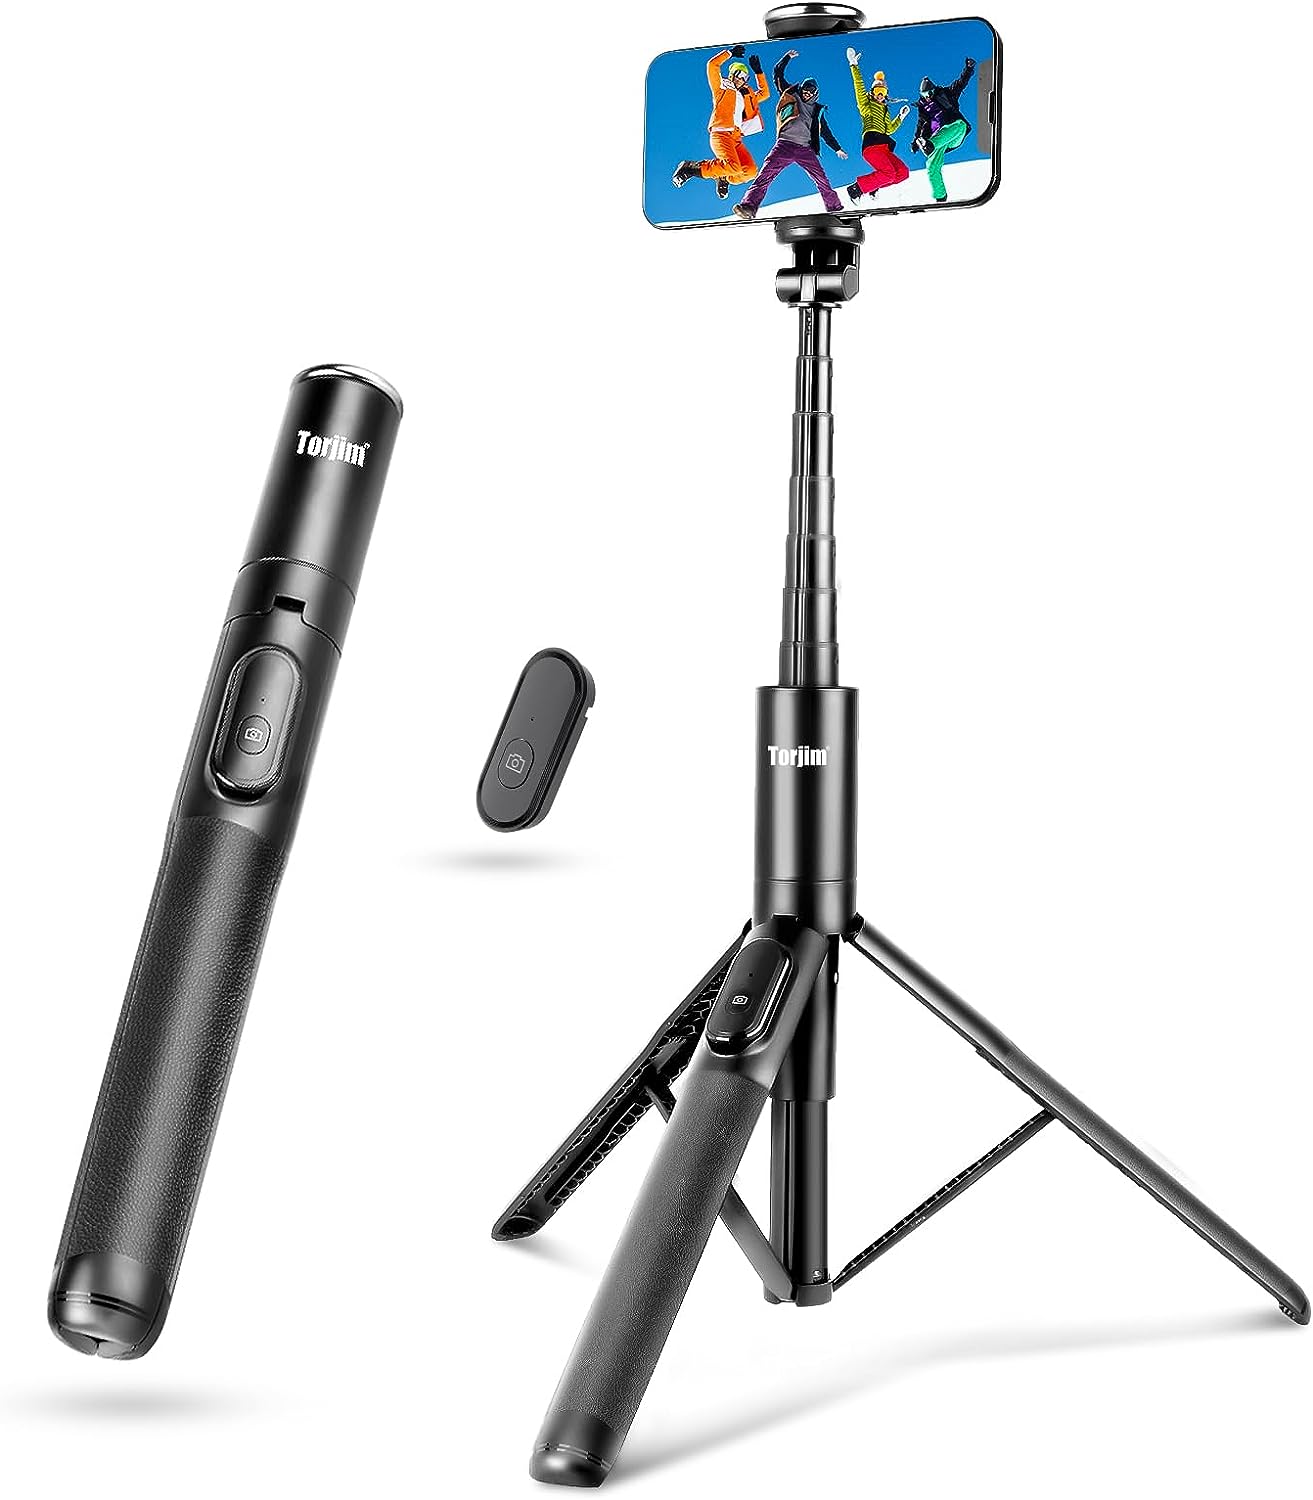 Torjim 68” All in One Phone Tripod & Selfie Stick